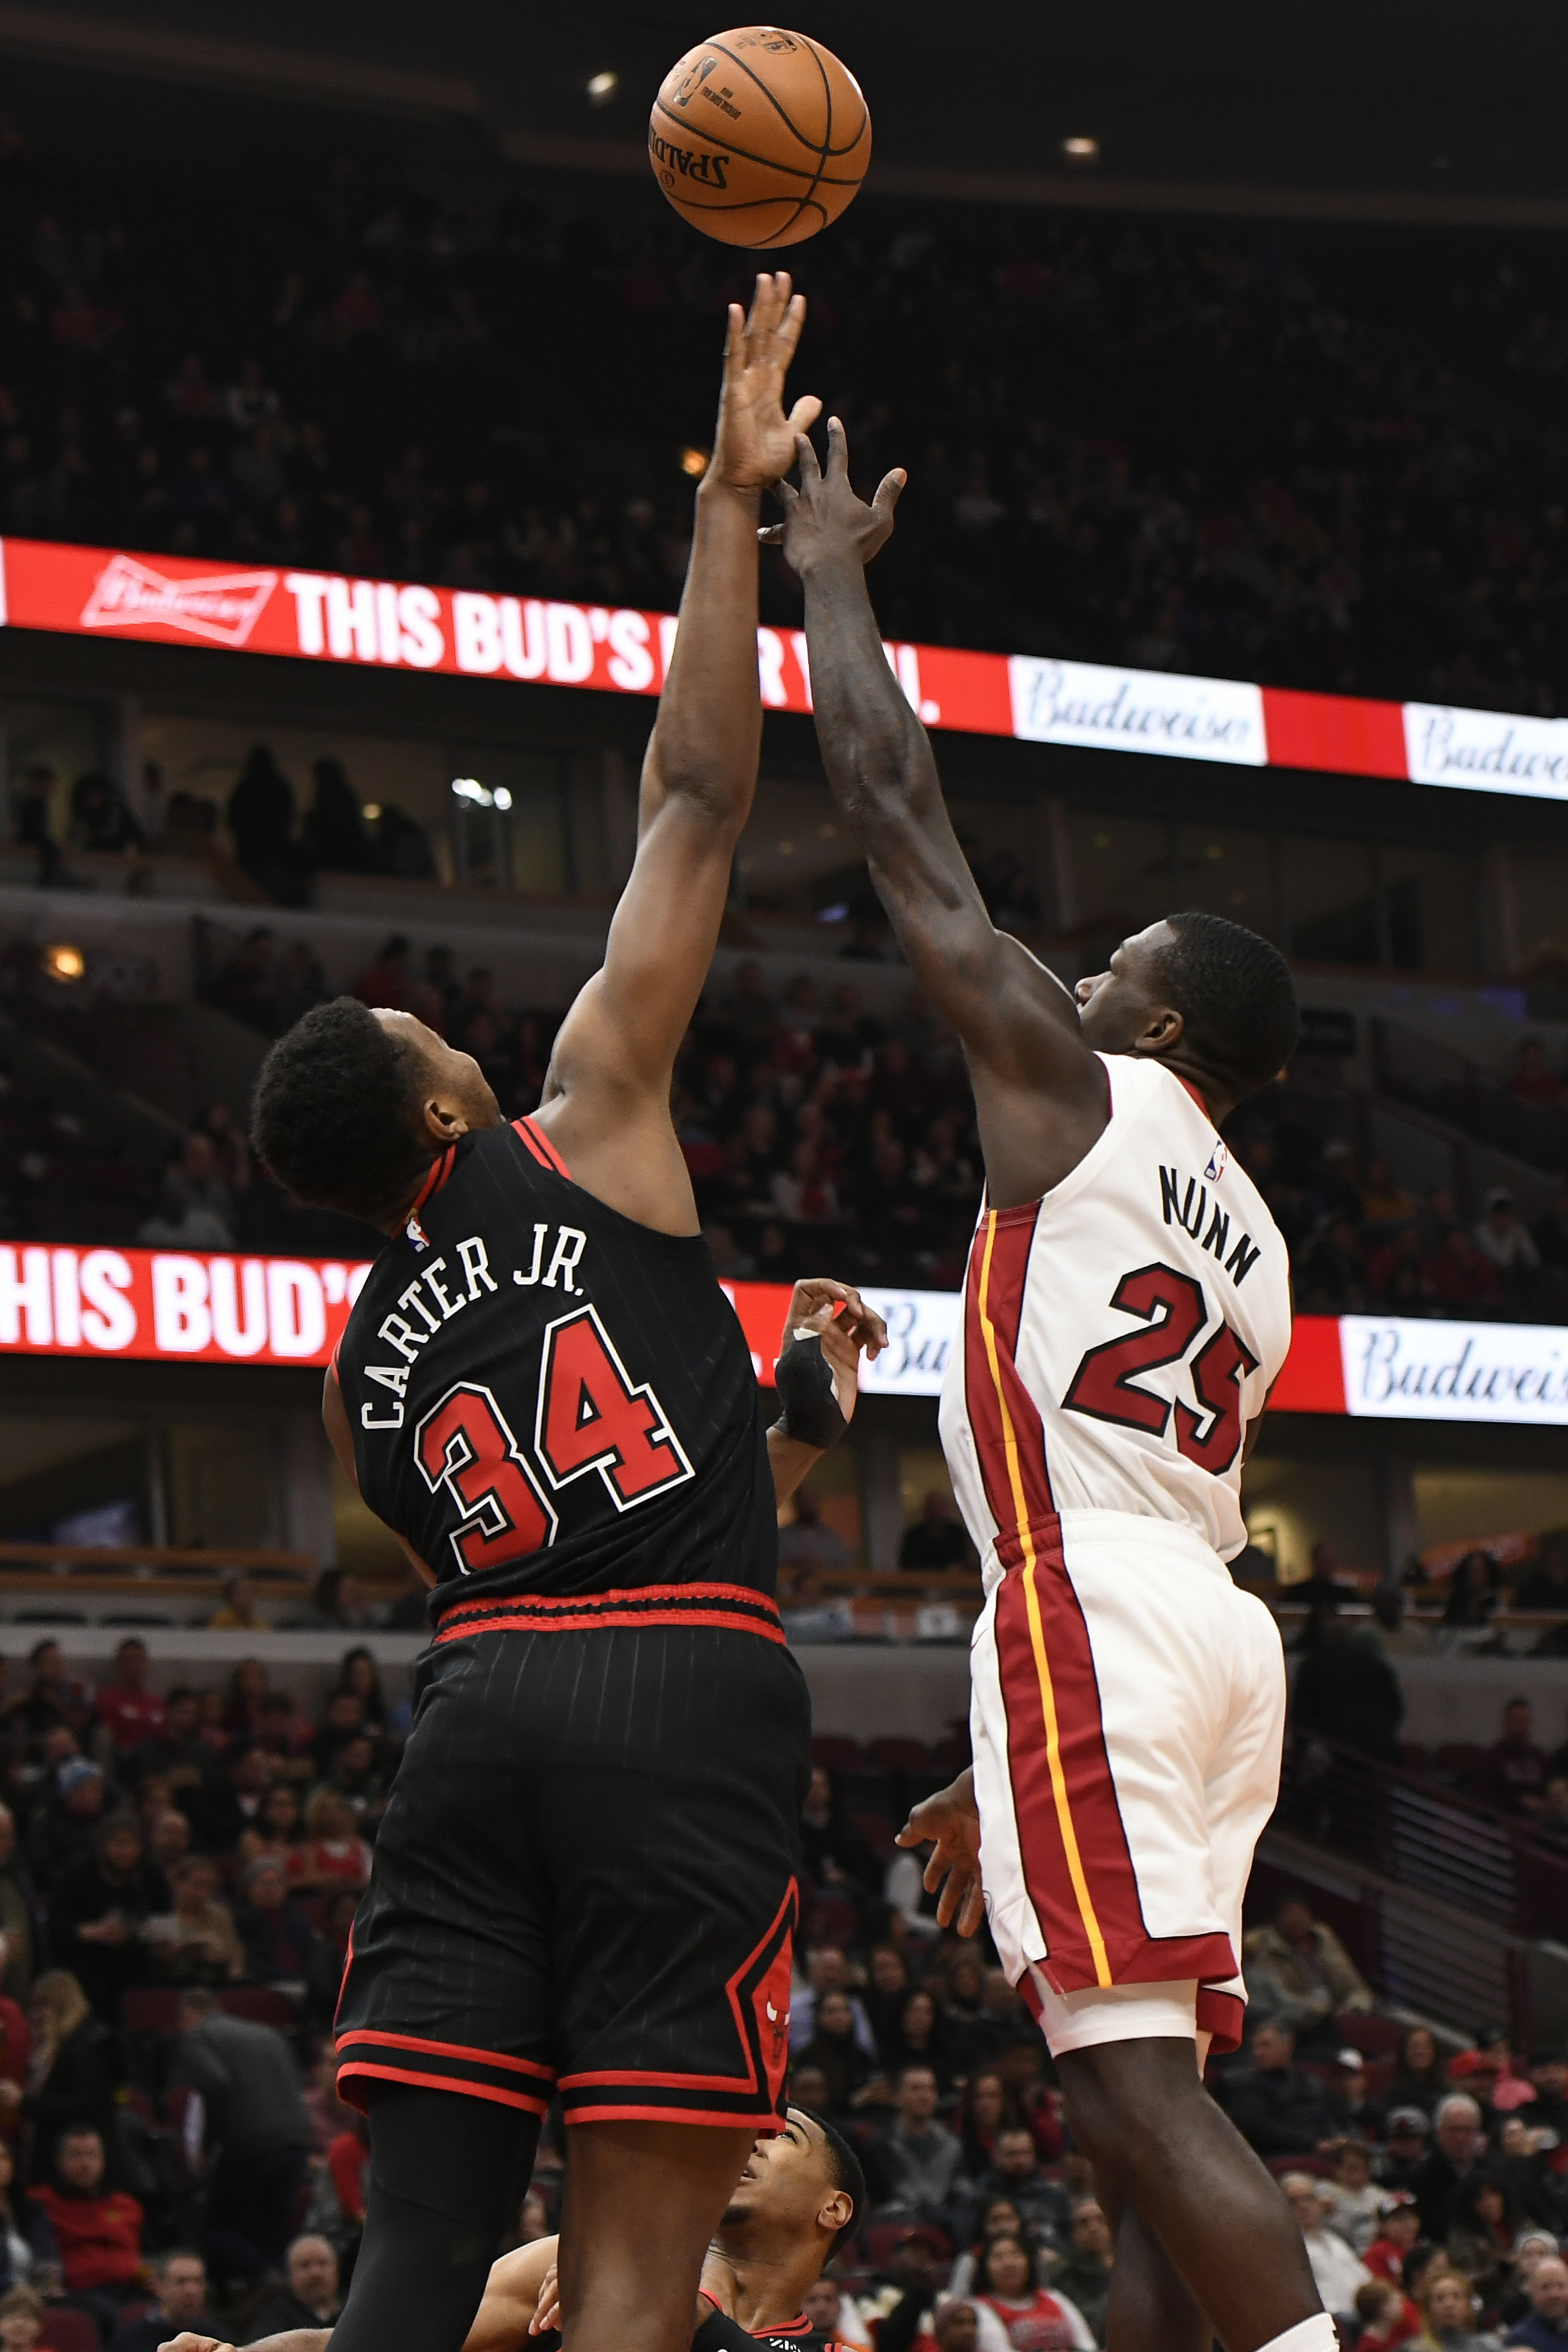 Butler scores 27 points against former team, Heat beat Bulls